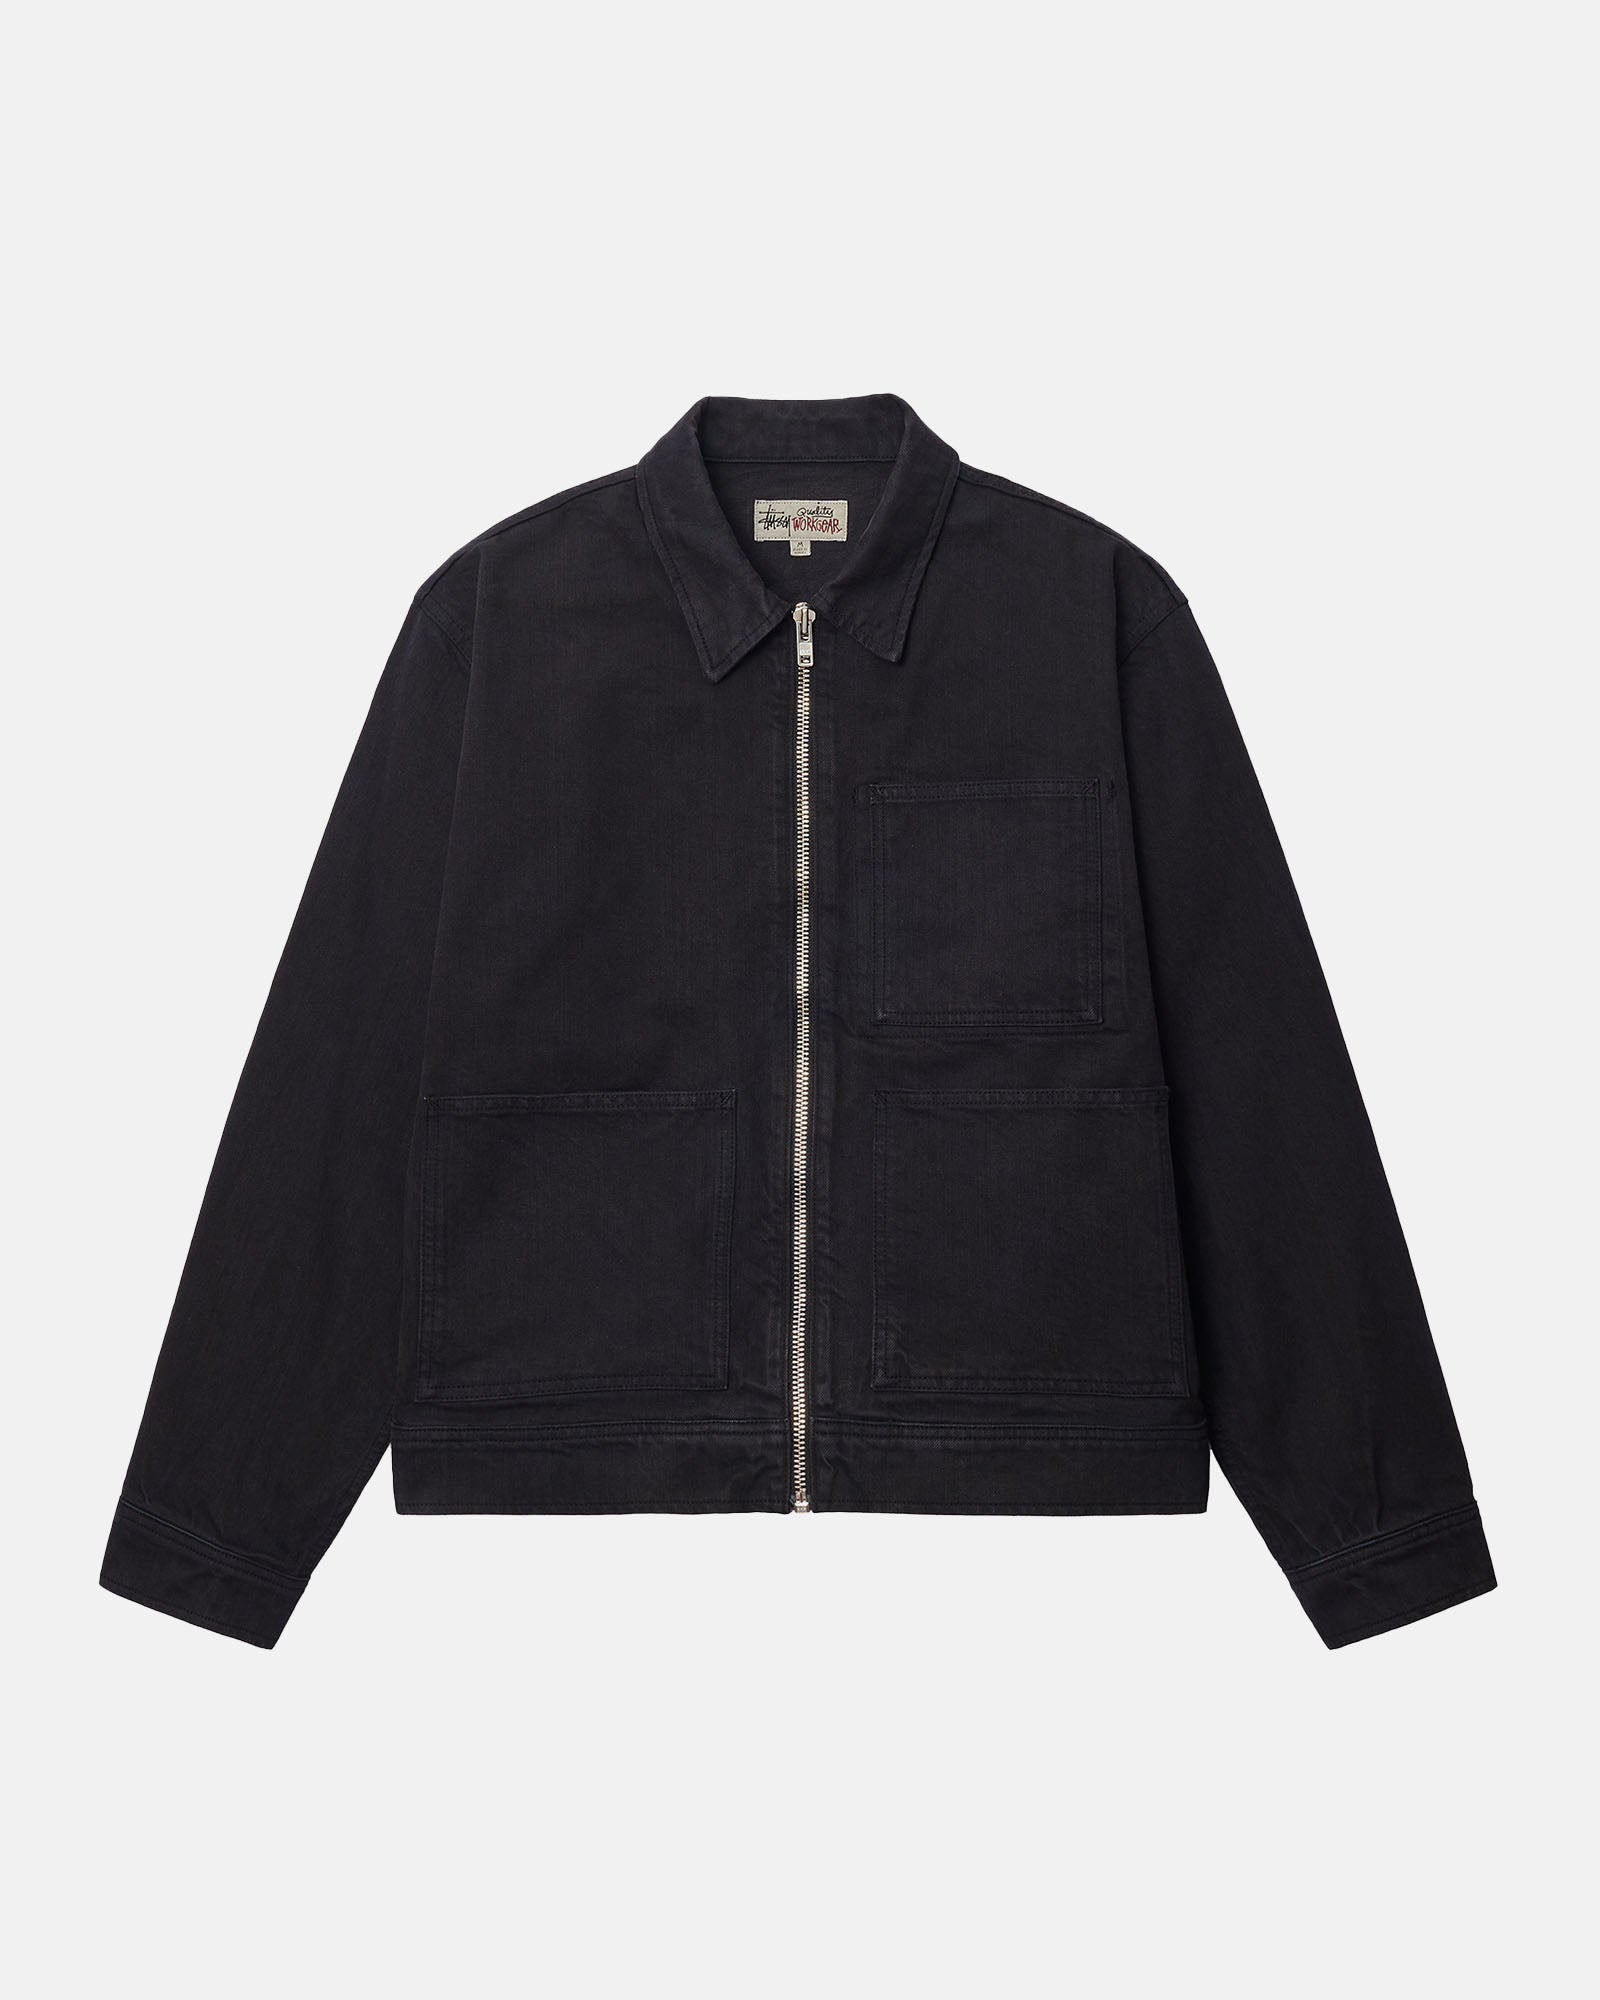 Zip Work Jacket Overdyed - Unisex Jackets & Outerwear